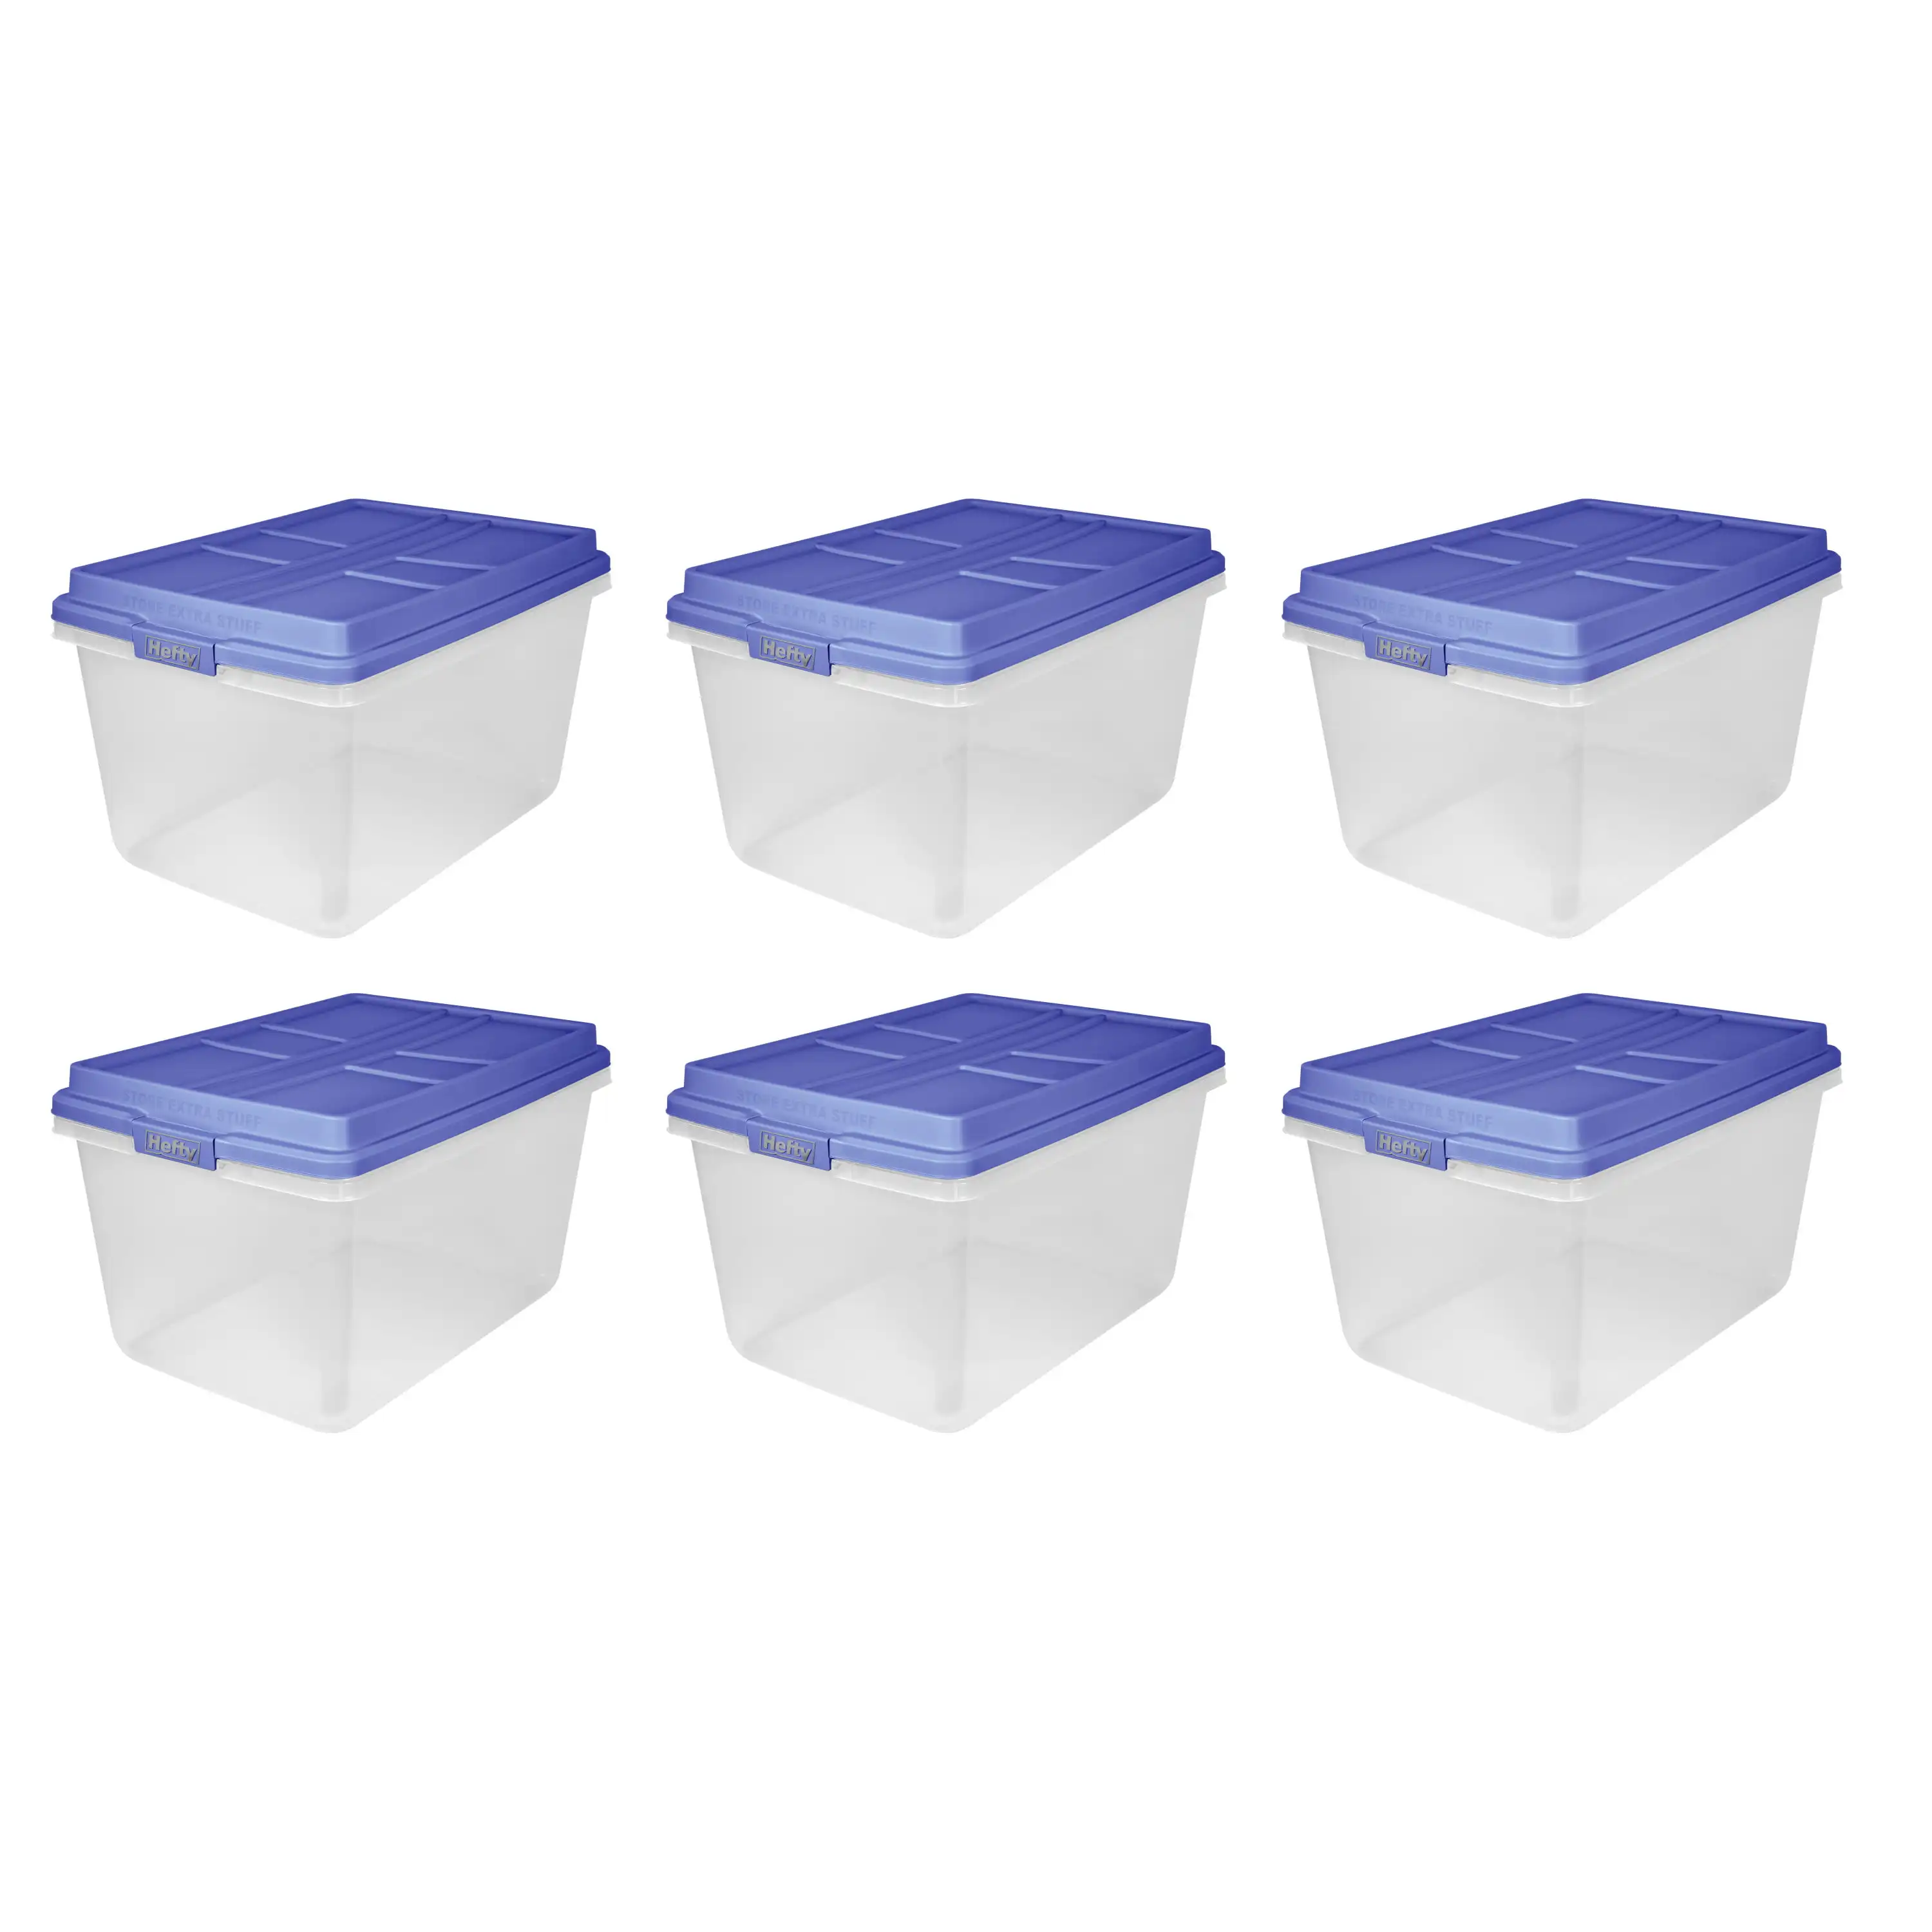 https://ae01.alicdn.com/kf/S6e84632adbb84427ac6fe573a0391ebcF/Hefty-72-Qt-Clear-Plastic-Storage-Bin-with-Blue-HI-RISE-Lid-6-Pack.jpg